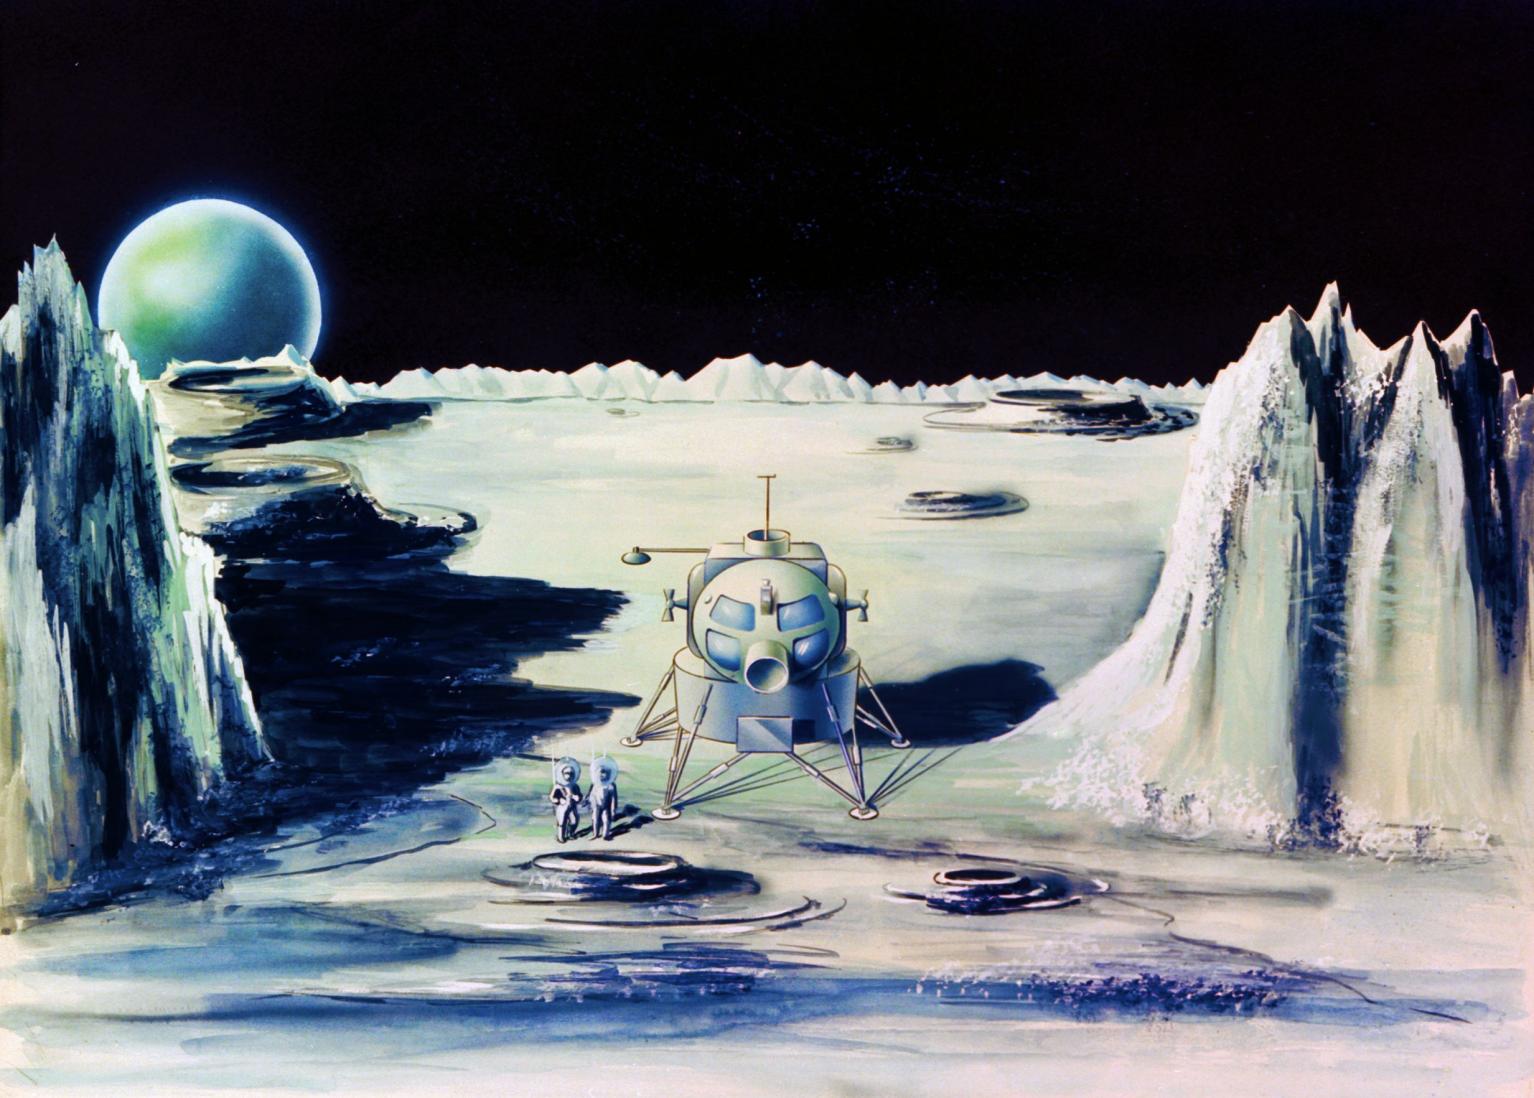 Painting Of Lunar Landscape